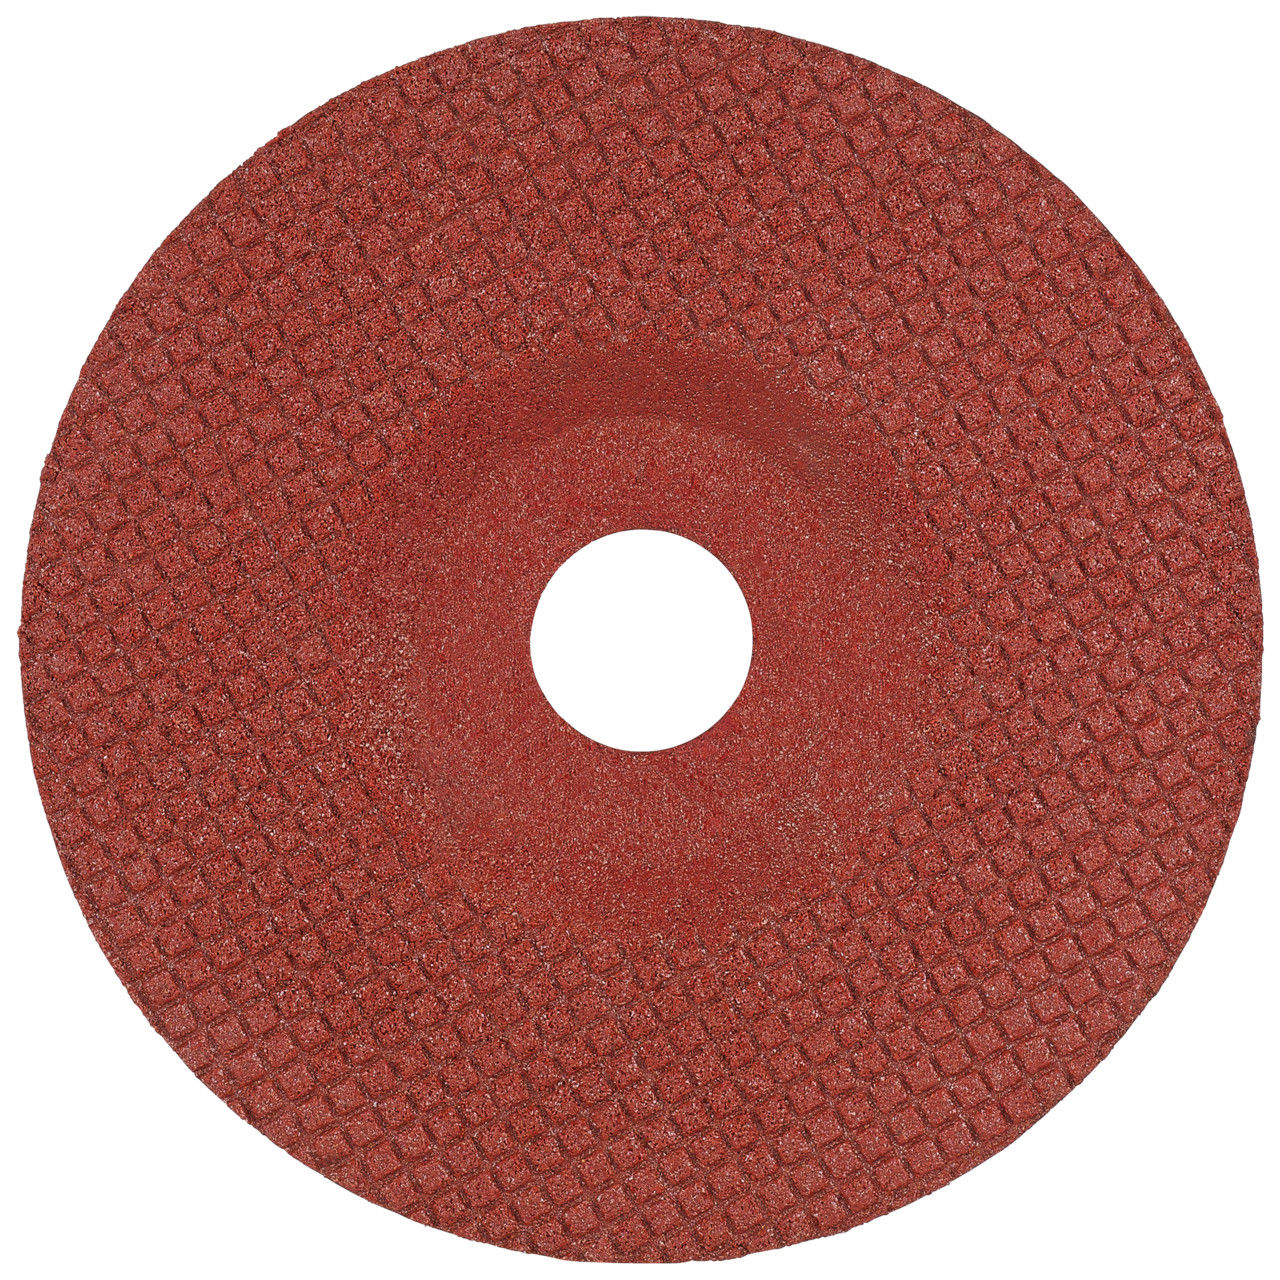 Disco de desbaste TYROLIT DxH 115x22,23 TOUCH para acero inoxidable y metales no férricos, forma: 29T - versión offset, Art. 236318